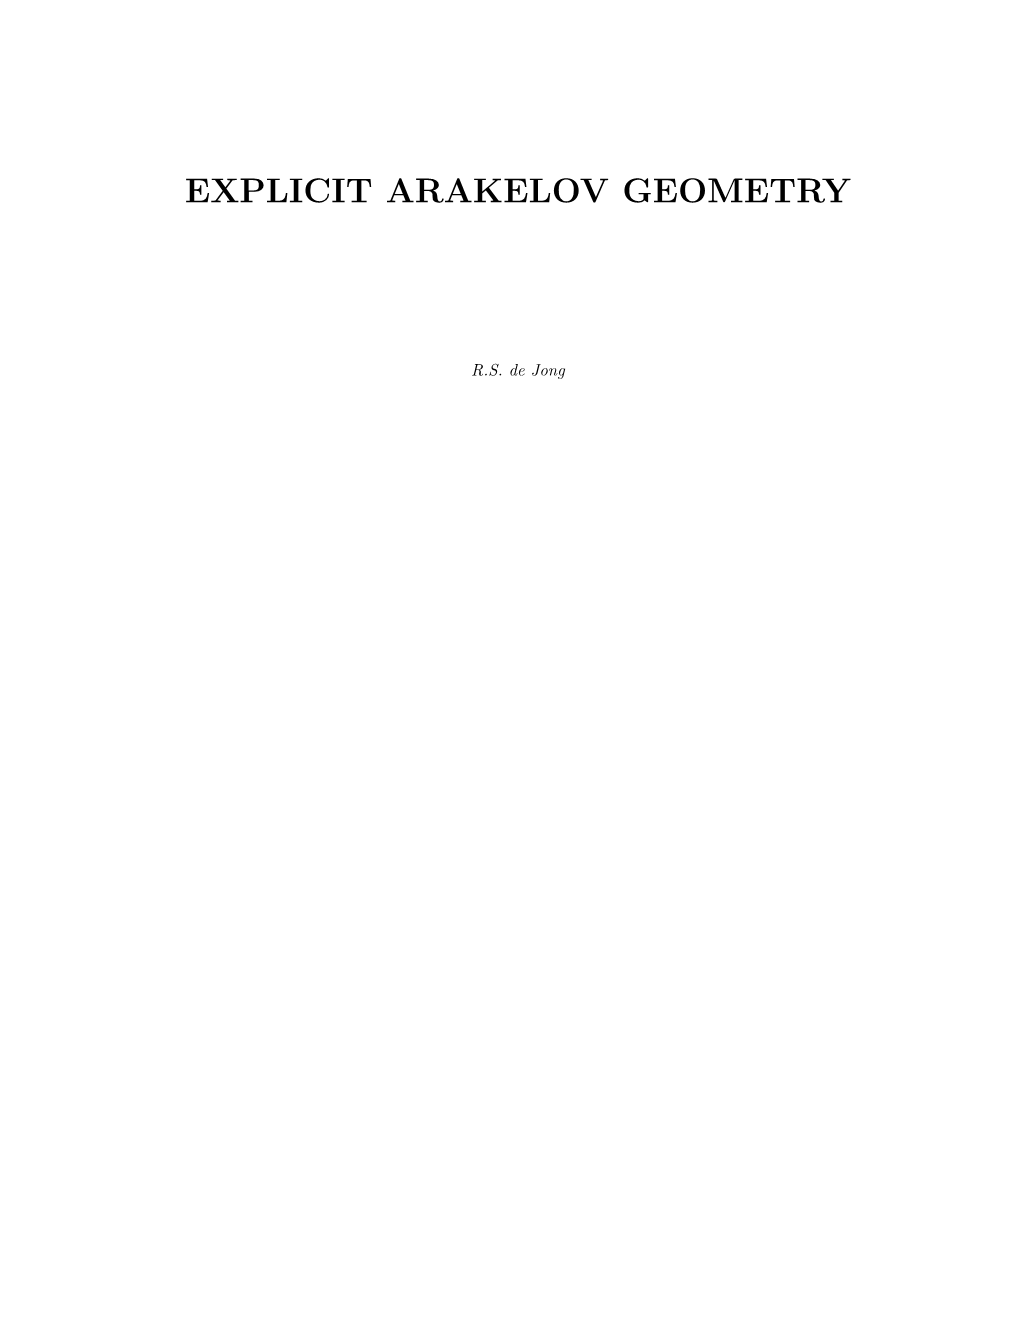 Explicit Arakelov Geometry